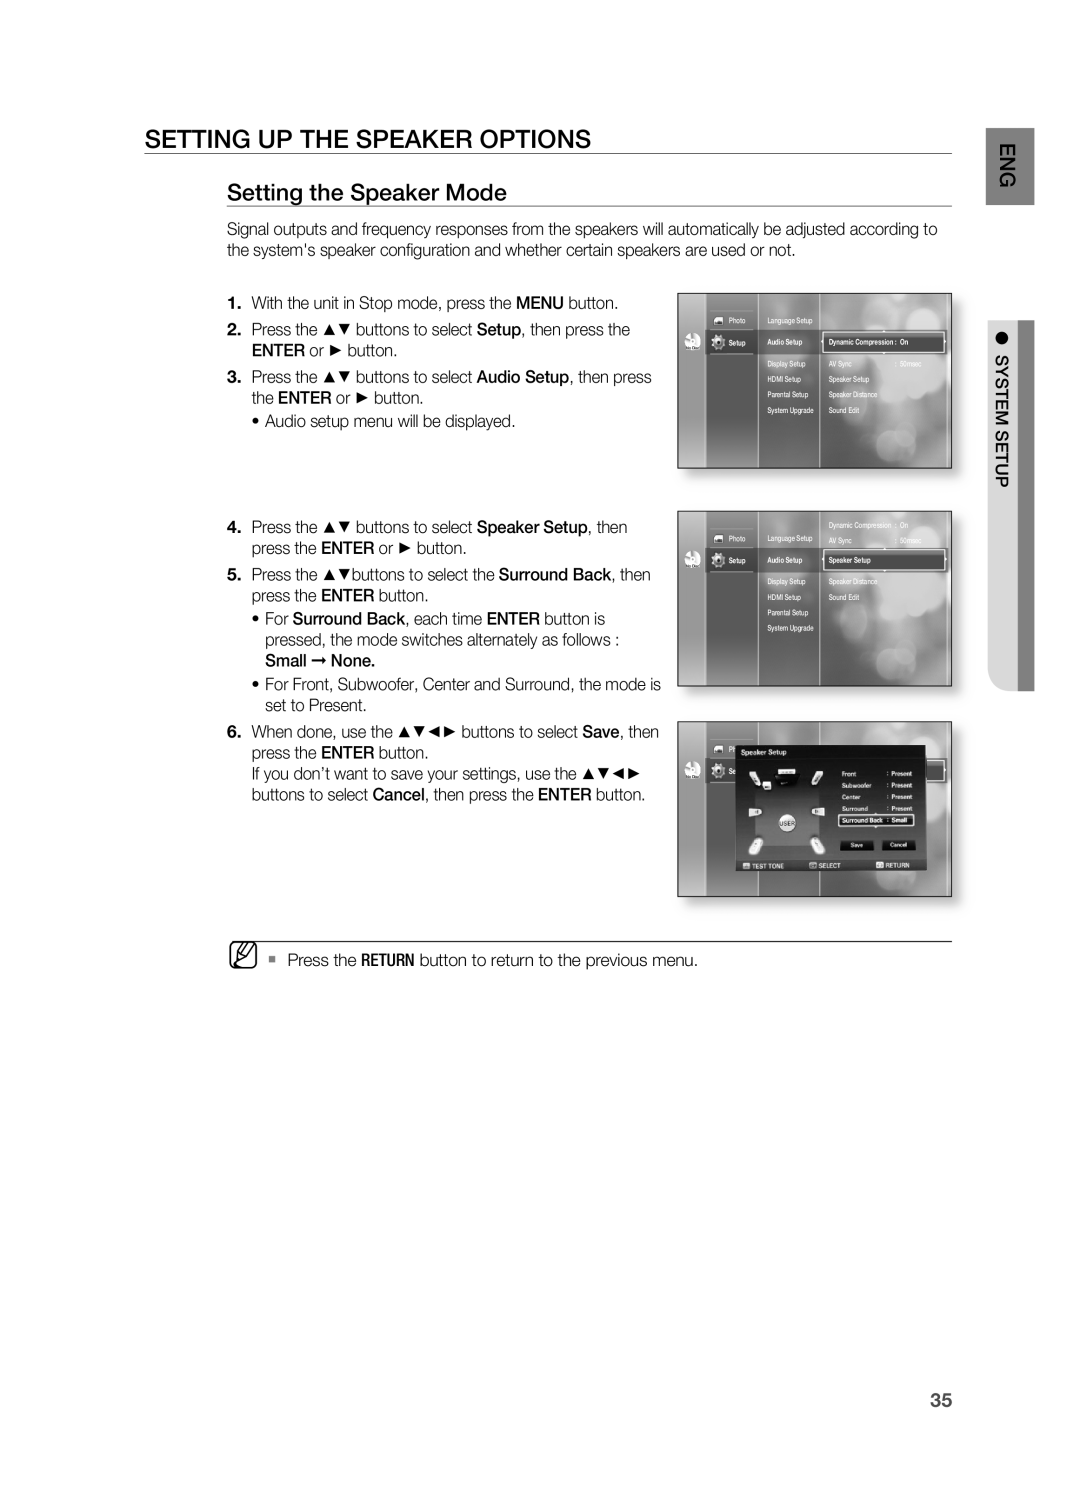 Samsung HT-BD2 manual Setting Up The Speaker Options, Setting the Speaker Mode 